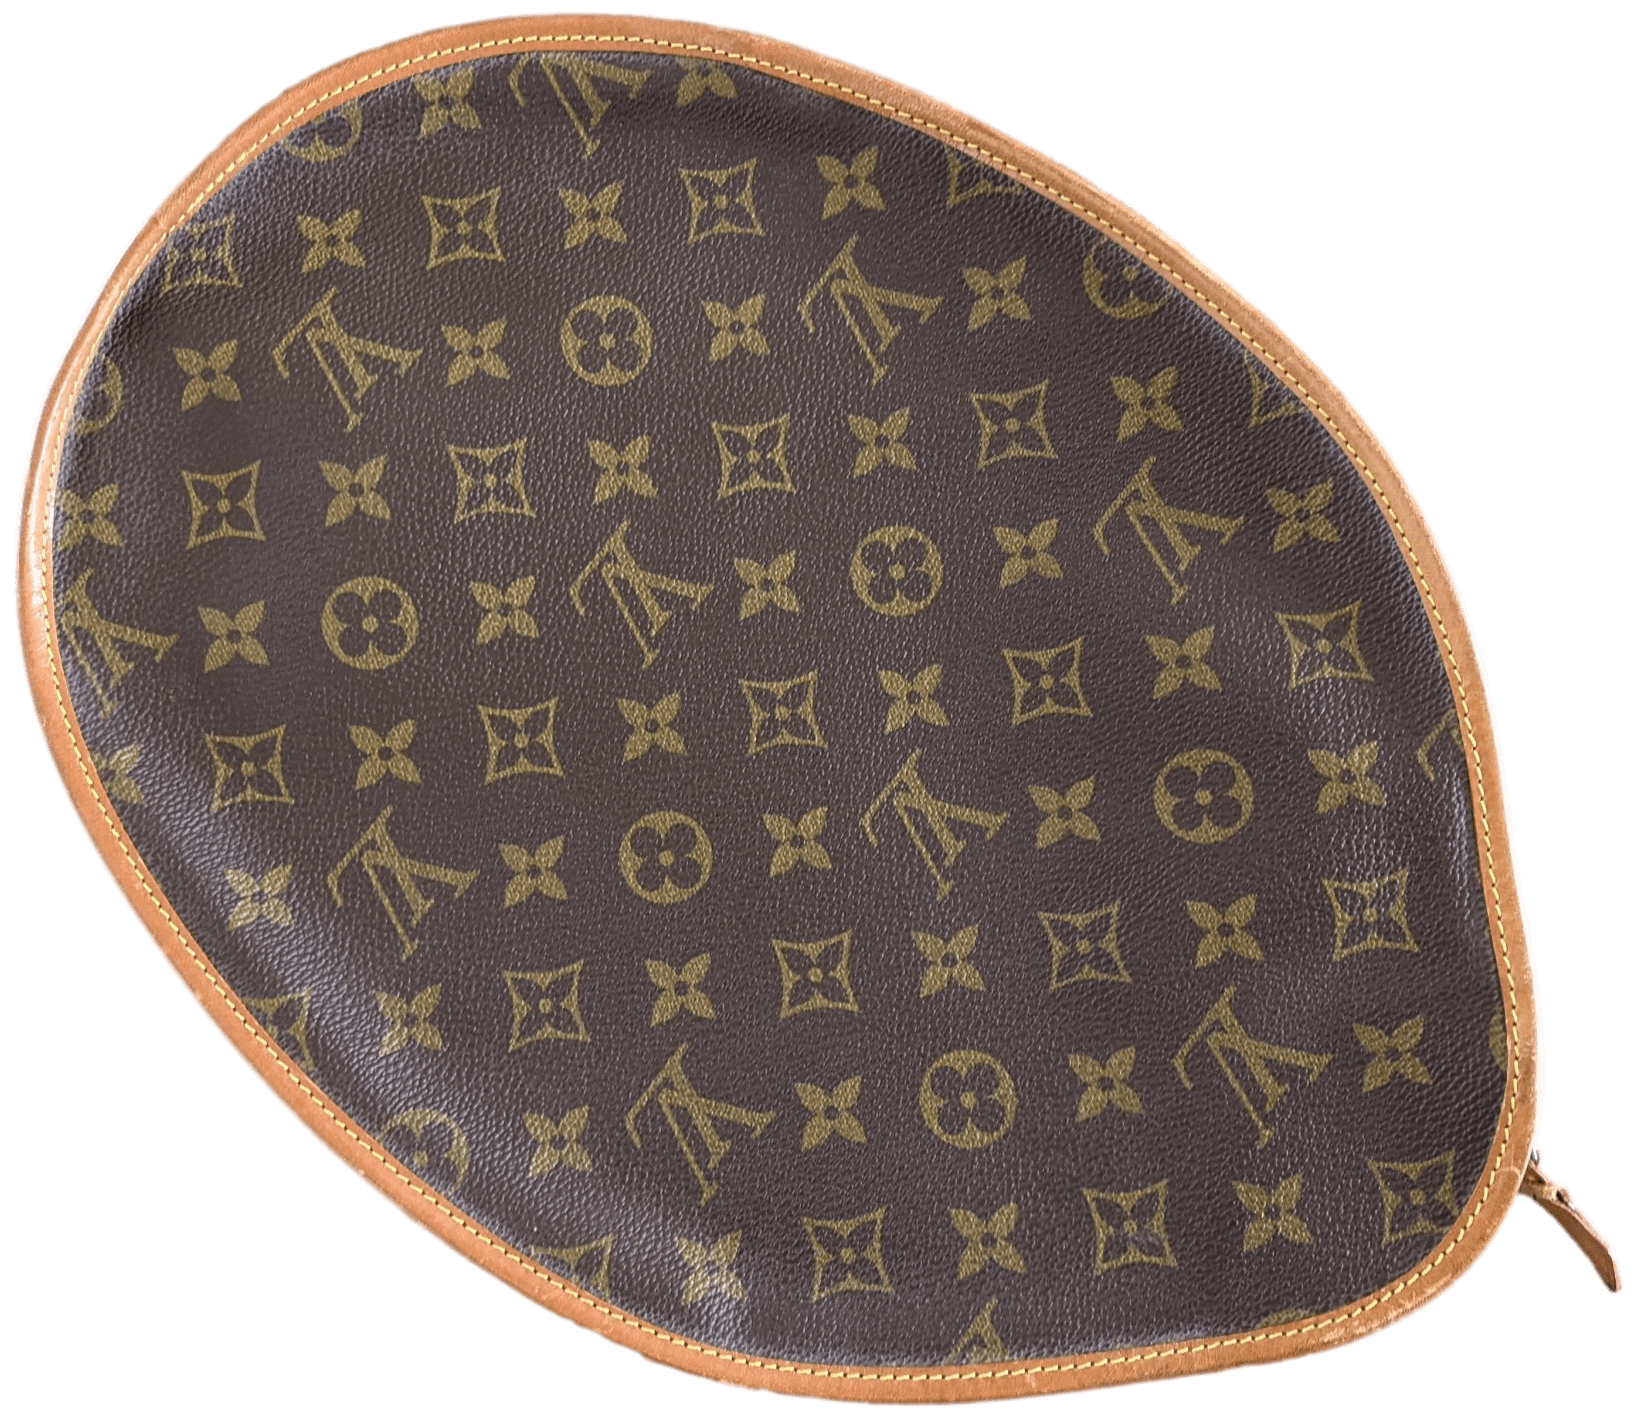 Louis Vuitton Tennis Racket Bag Case Monogram Vintage from Japan